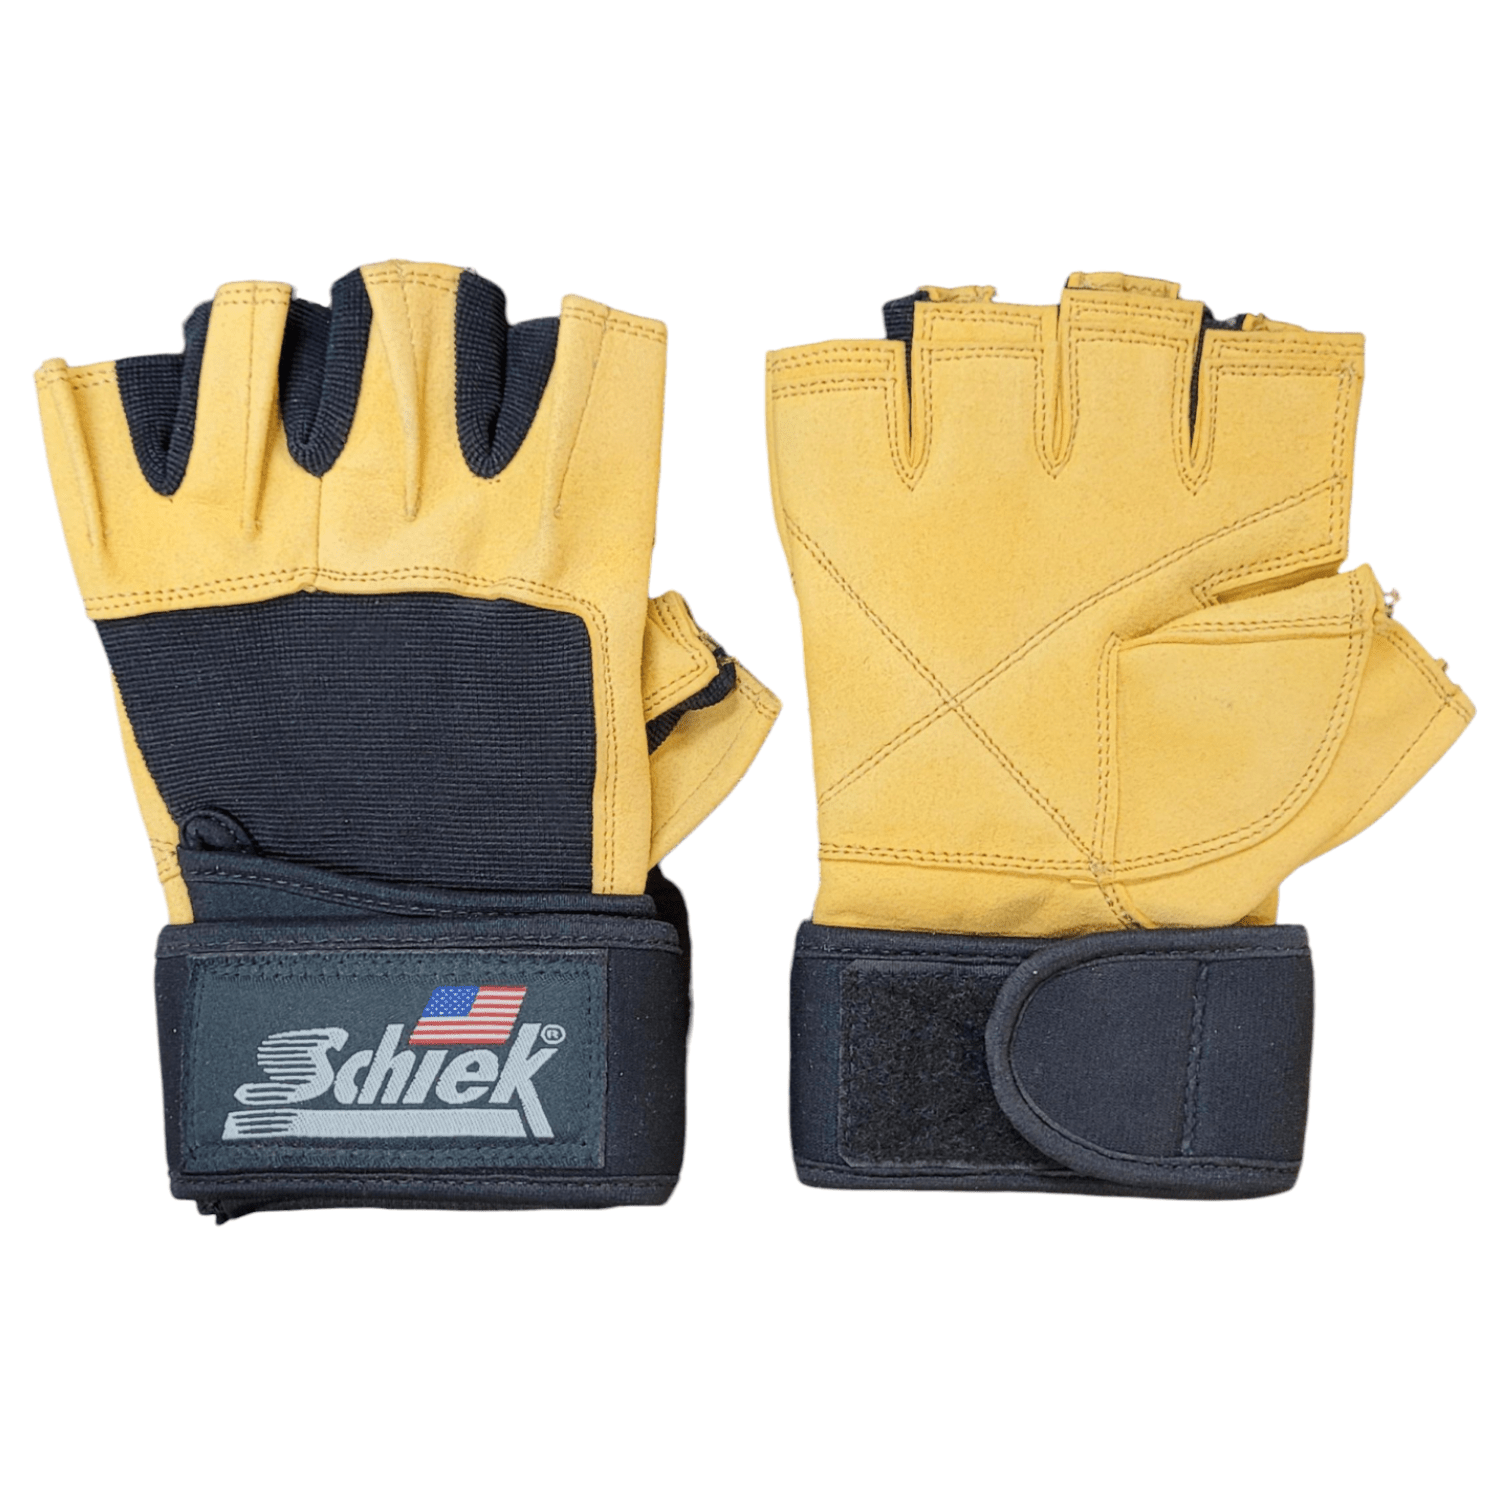 Schiek 425 Power Wrist Wrap Glove-Lifting Gloves-Schiek Sports-4